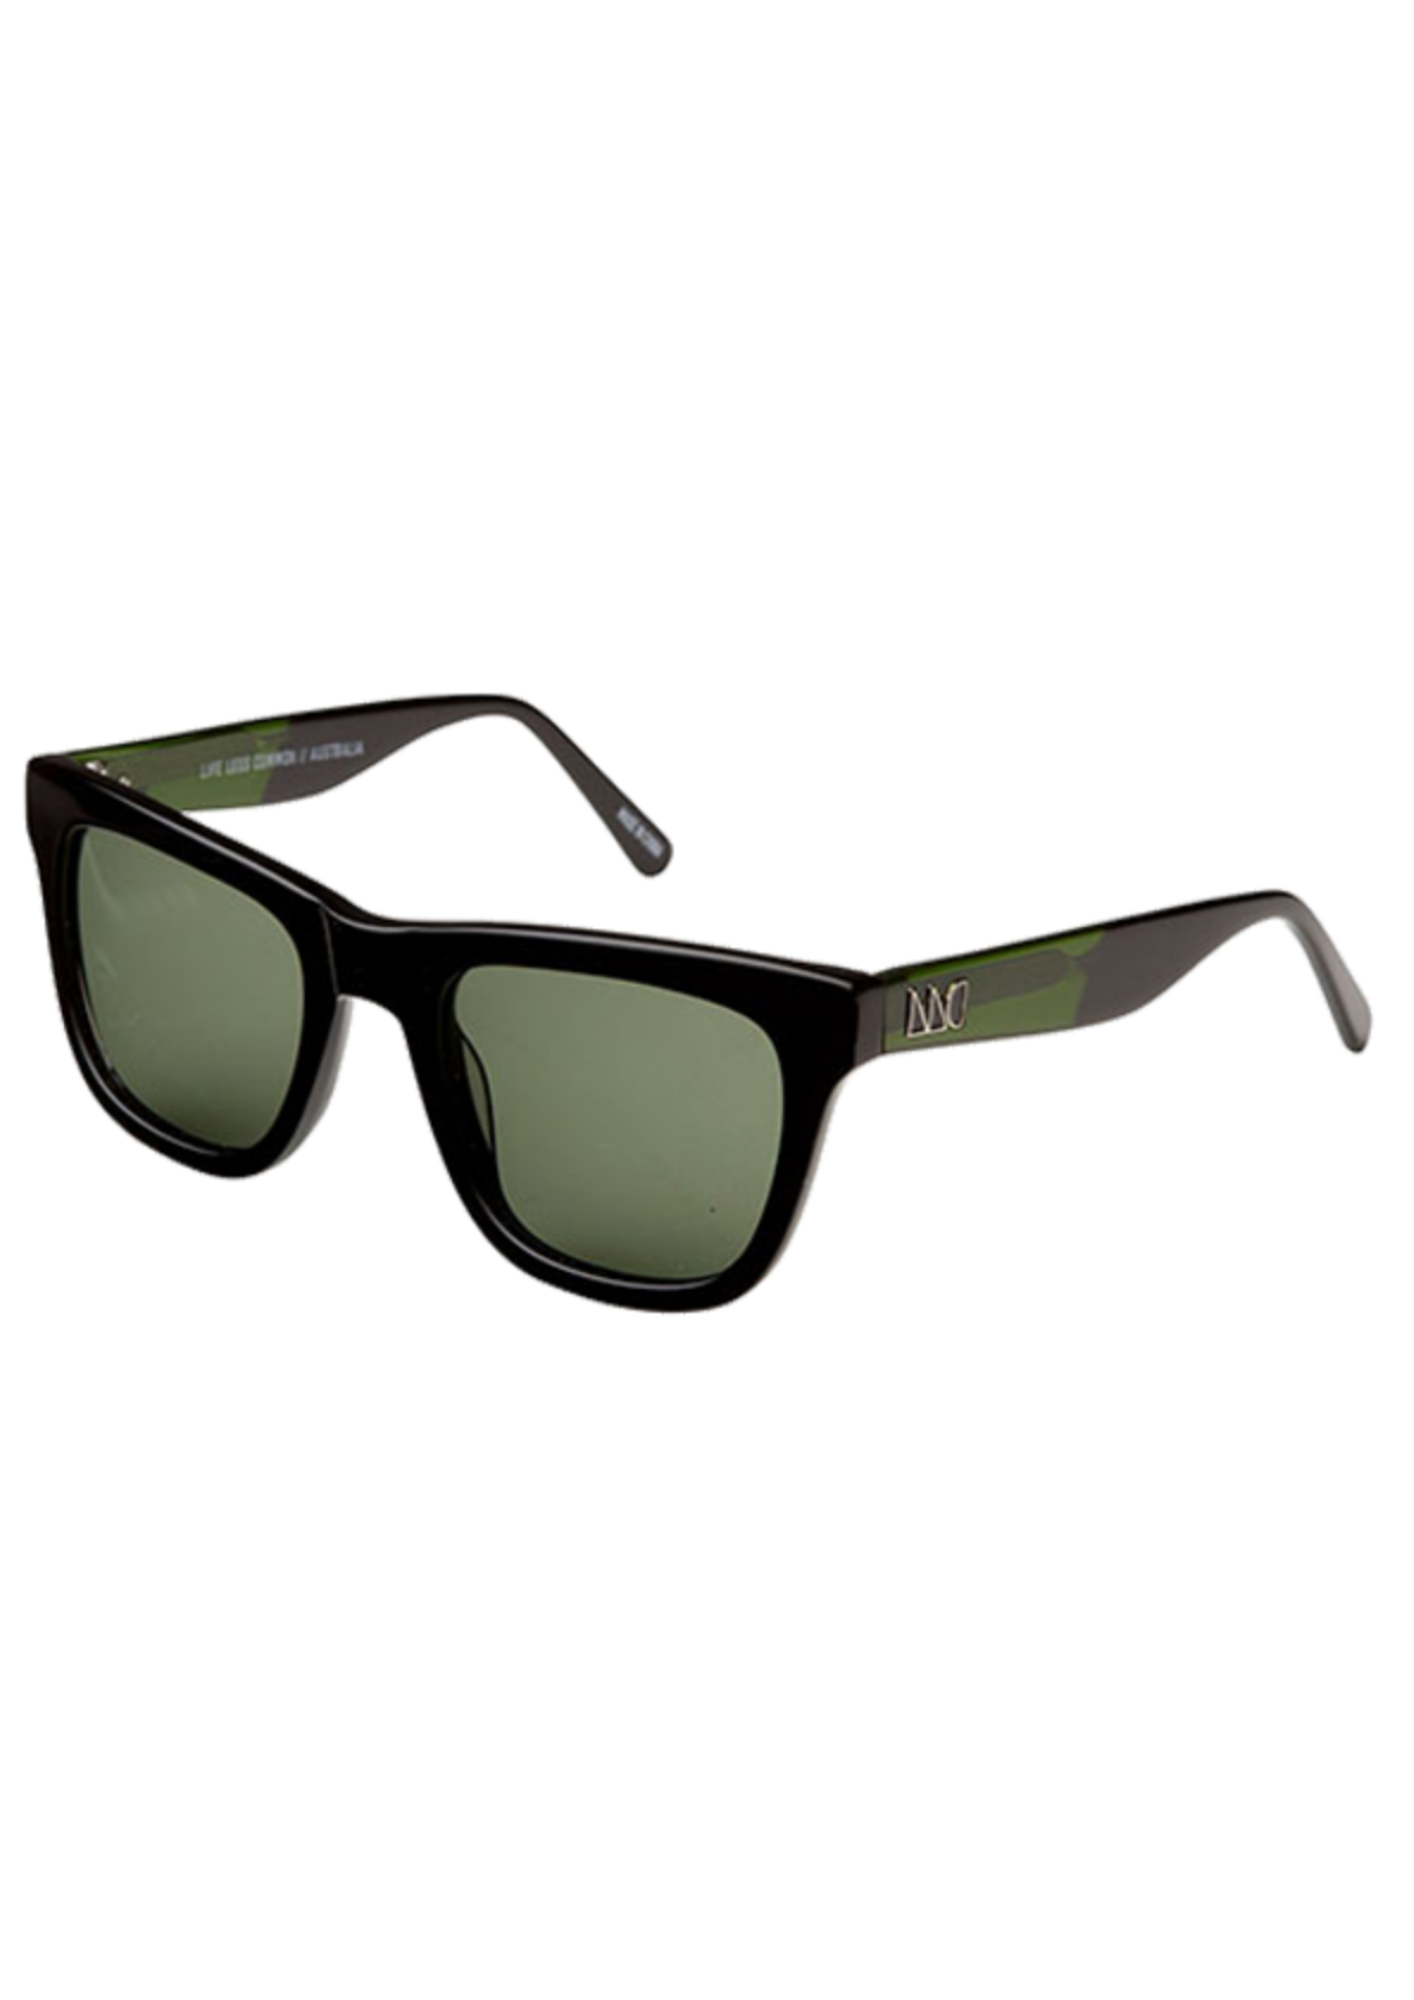 Life Less Common - Venice Black Sunglasses